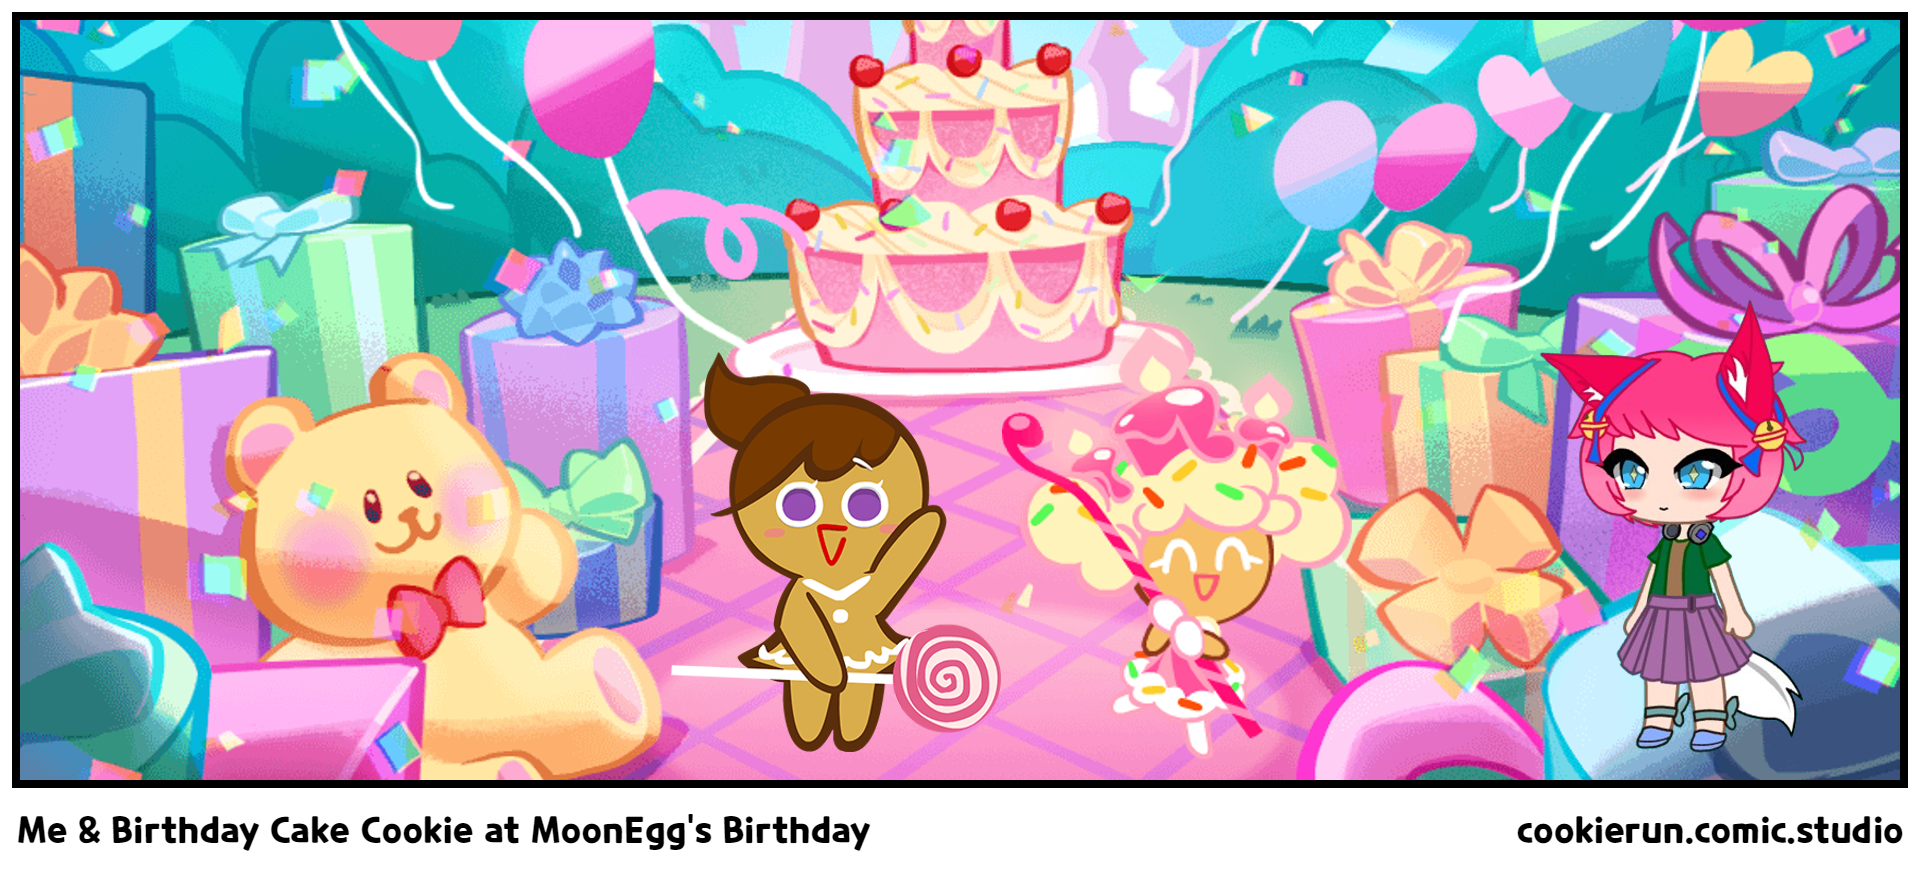 Me & Birthday Cake Cookie at MoonEgg's Birthday